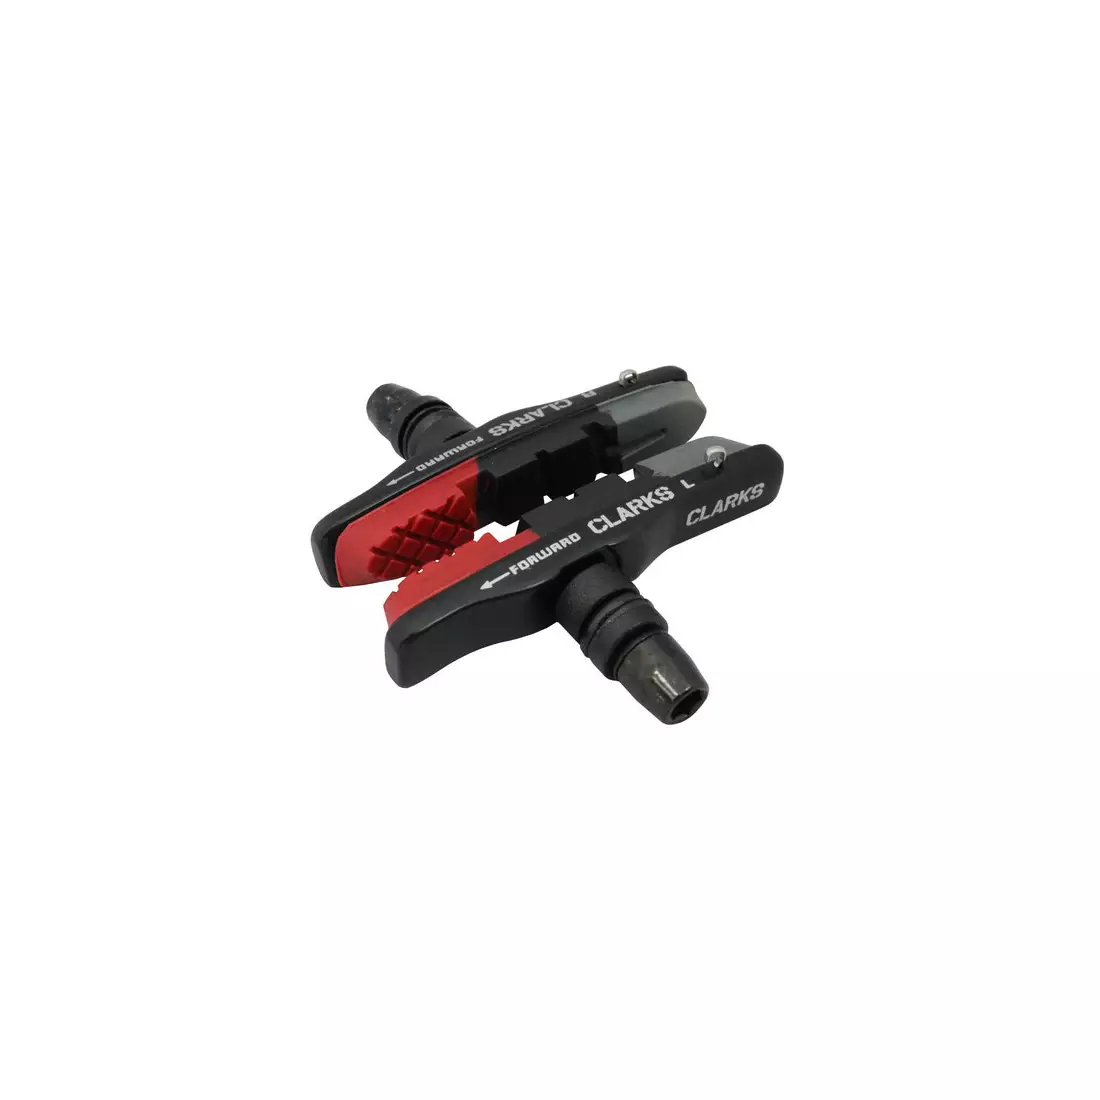 CLARKS CPS513 Fékbetétek fékekhez MTB V-brake, piros-fekete-szürke